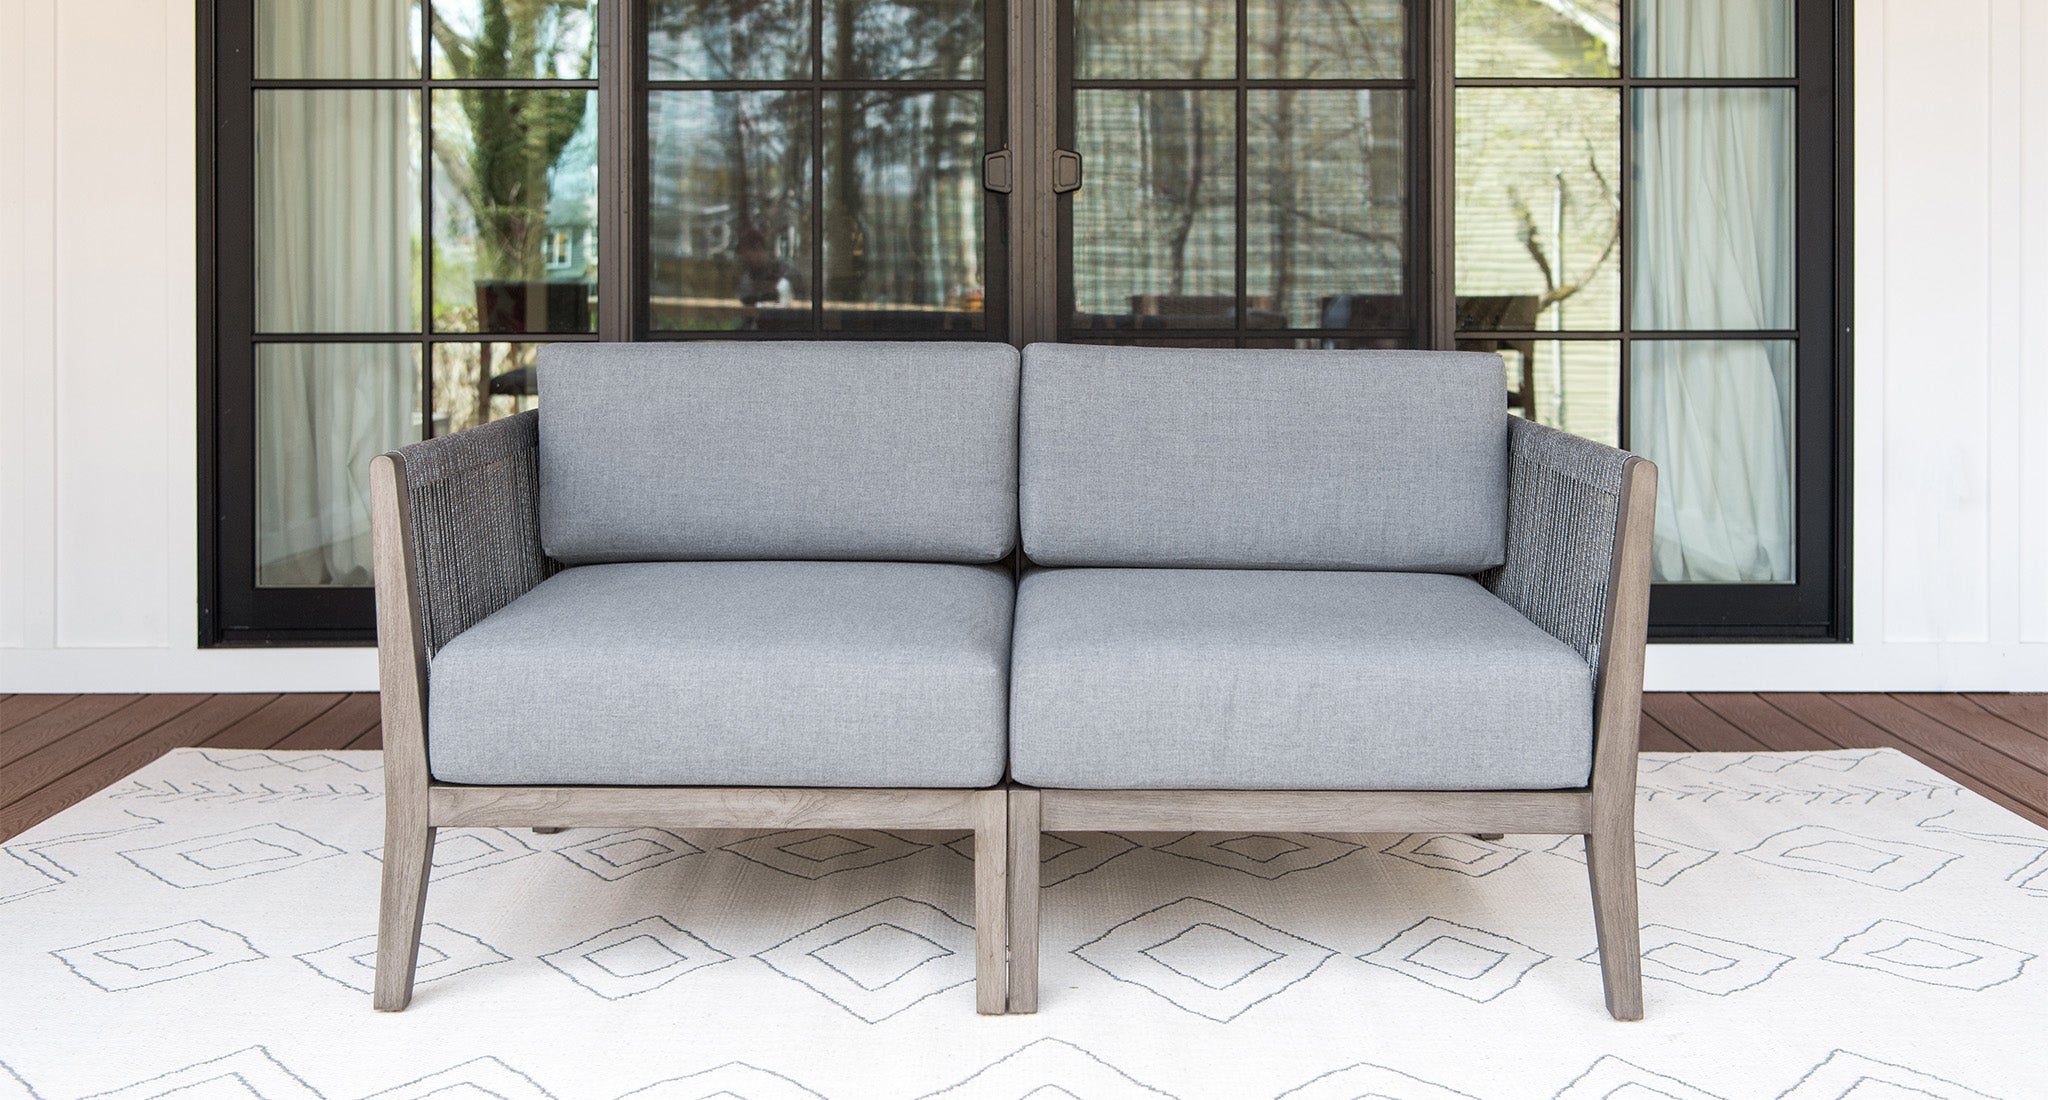 Teak and Rope Outdoor Furniture - Elegance Meets Comfort – Madbury